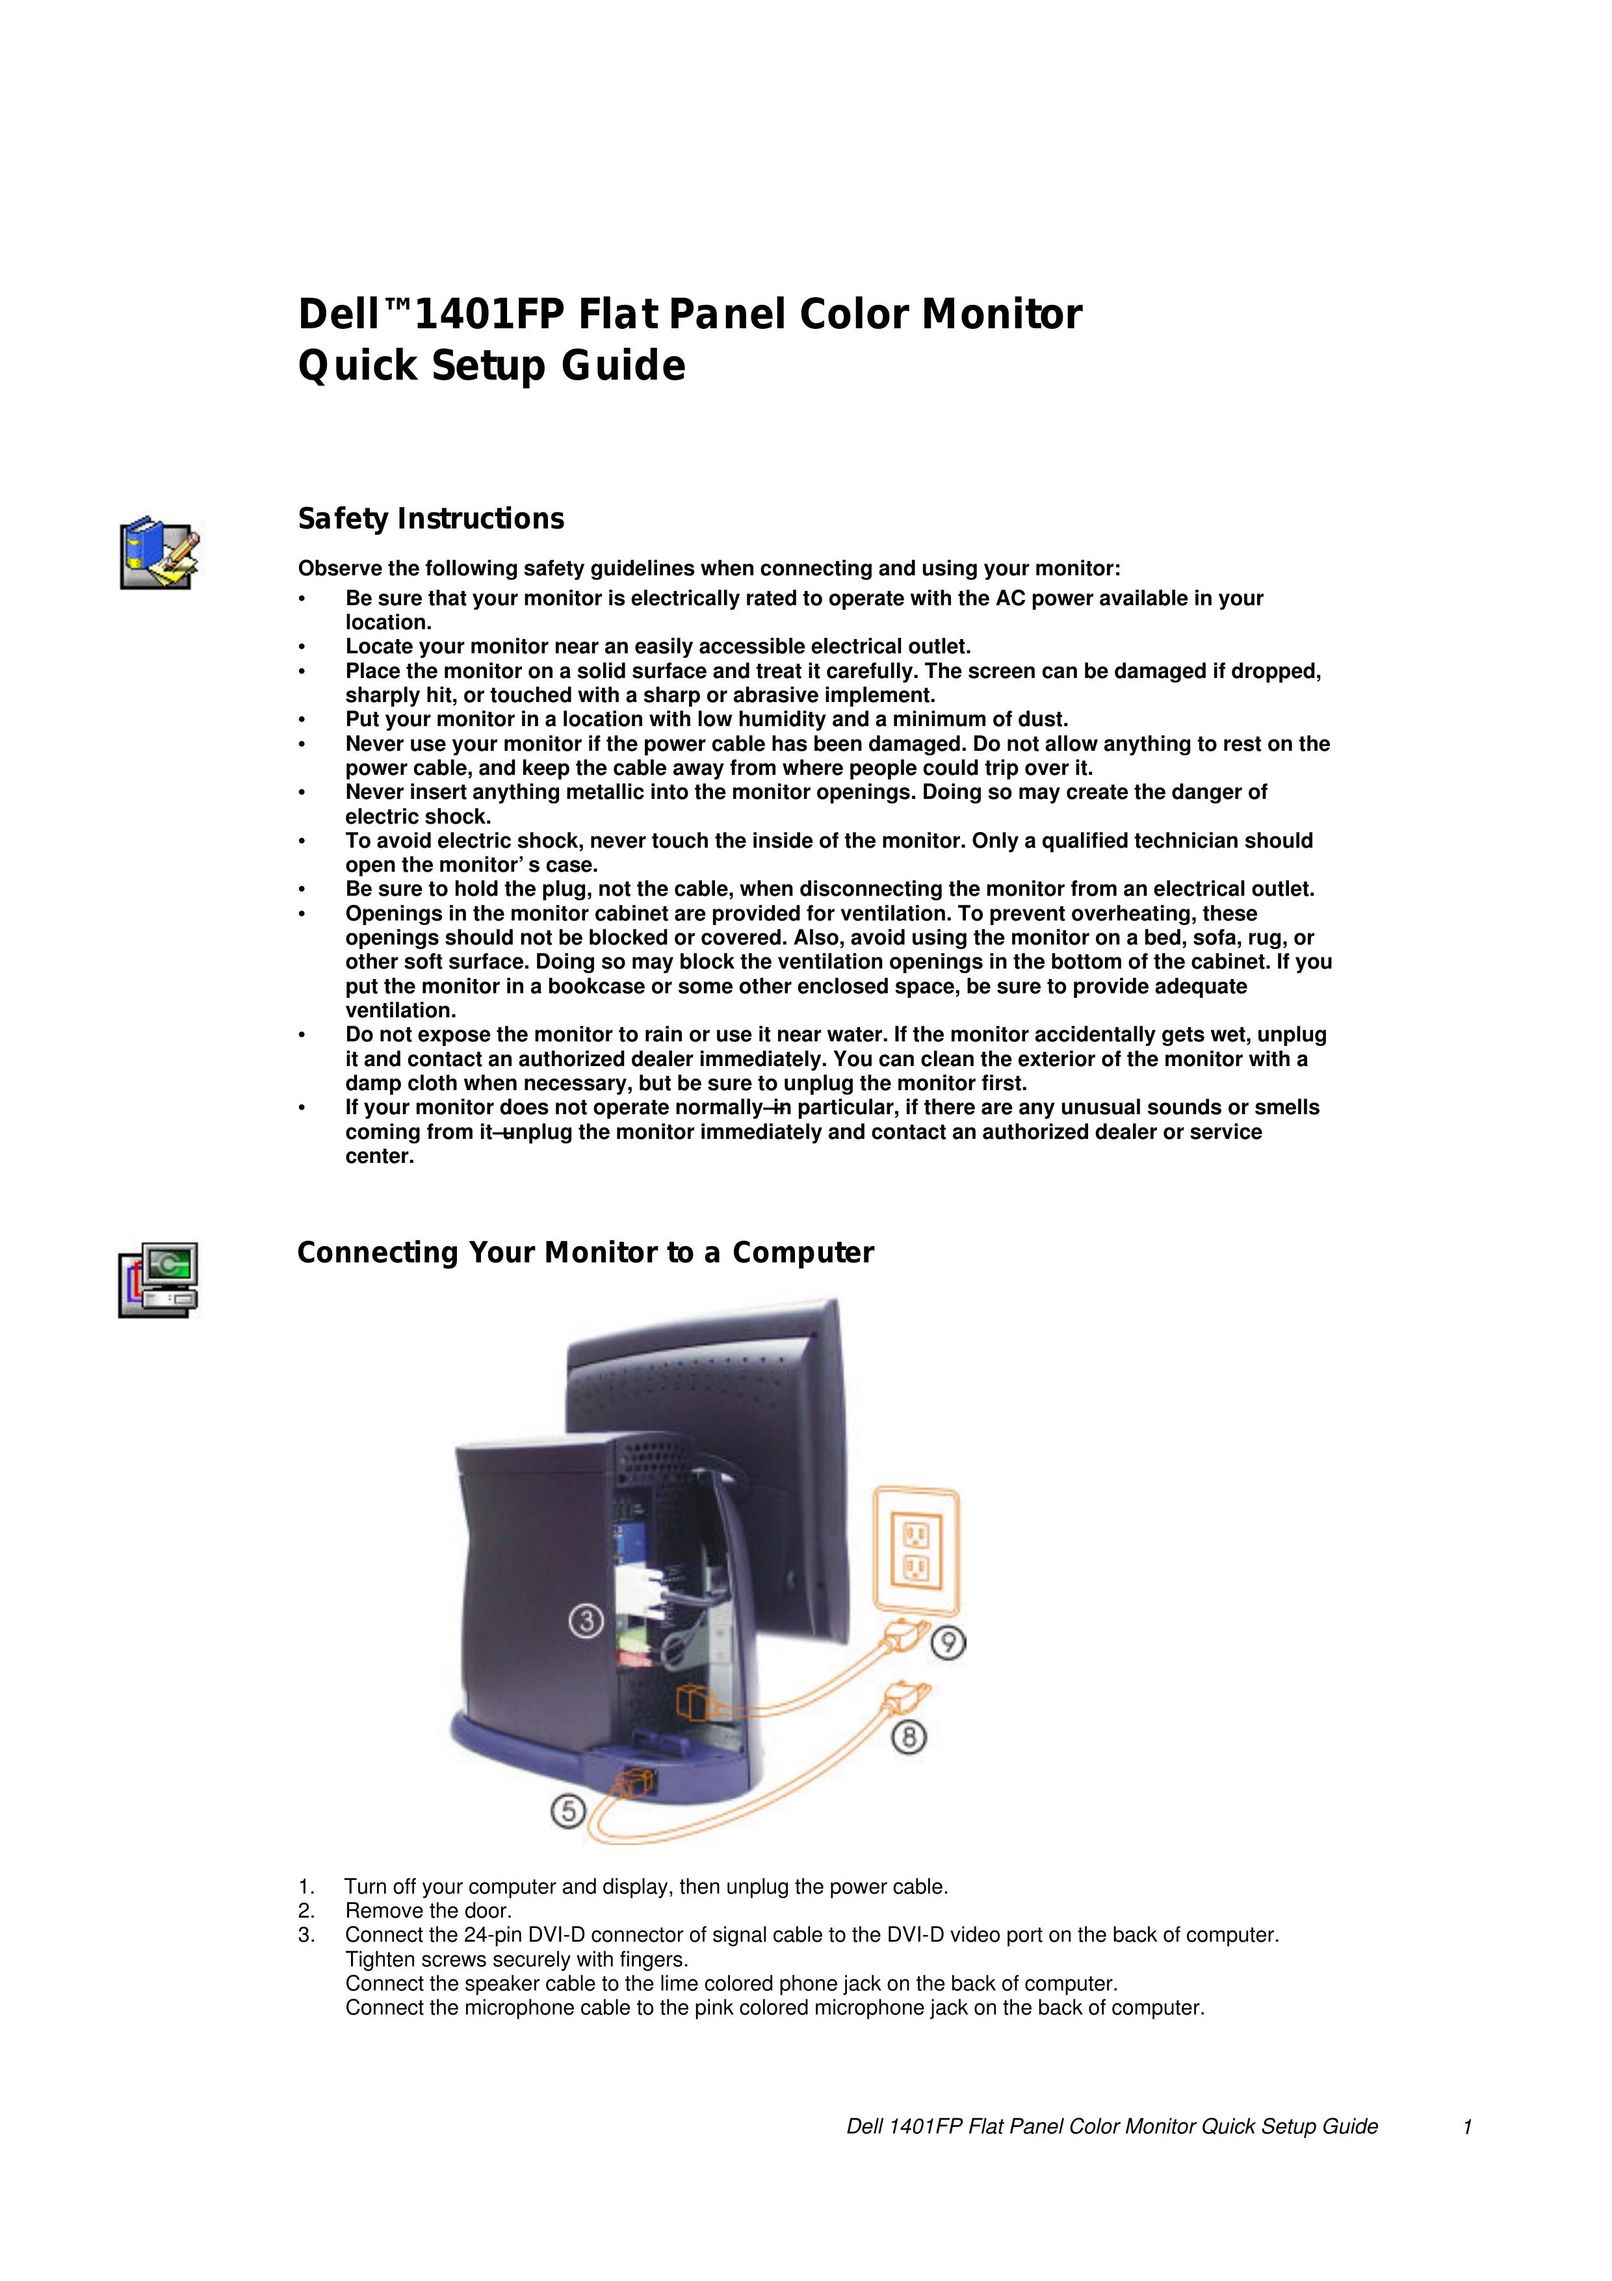 Dell 1401FP Computer Monitor User Manual